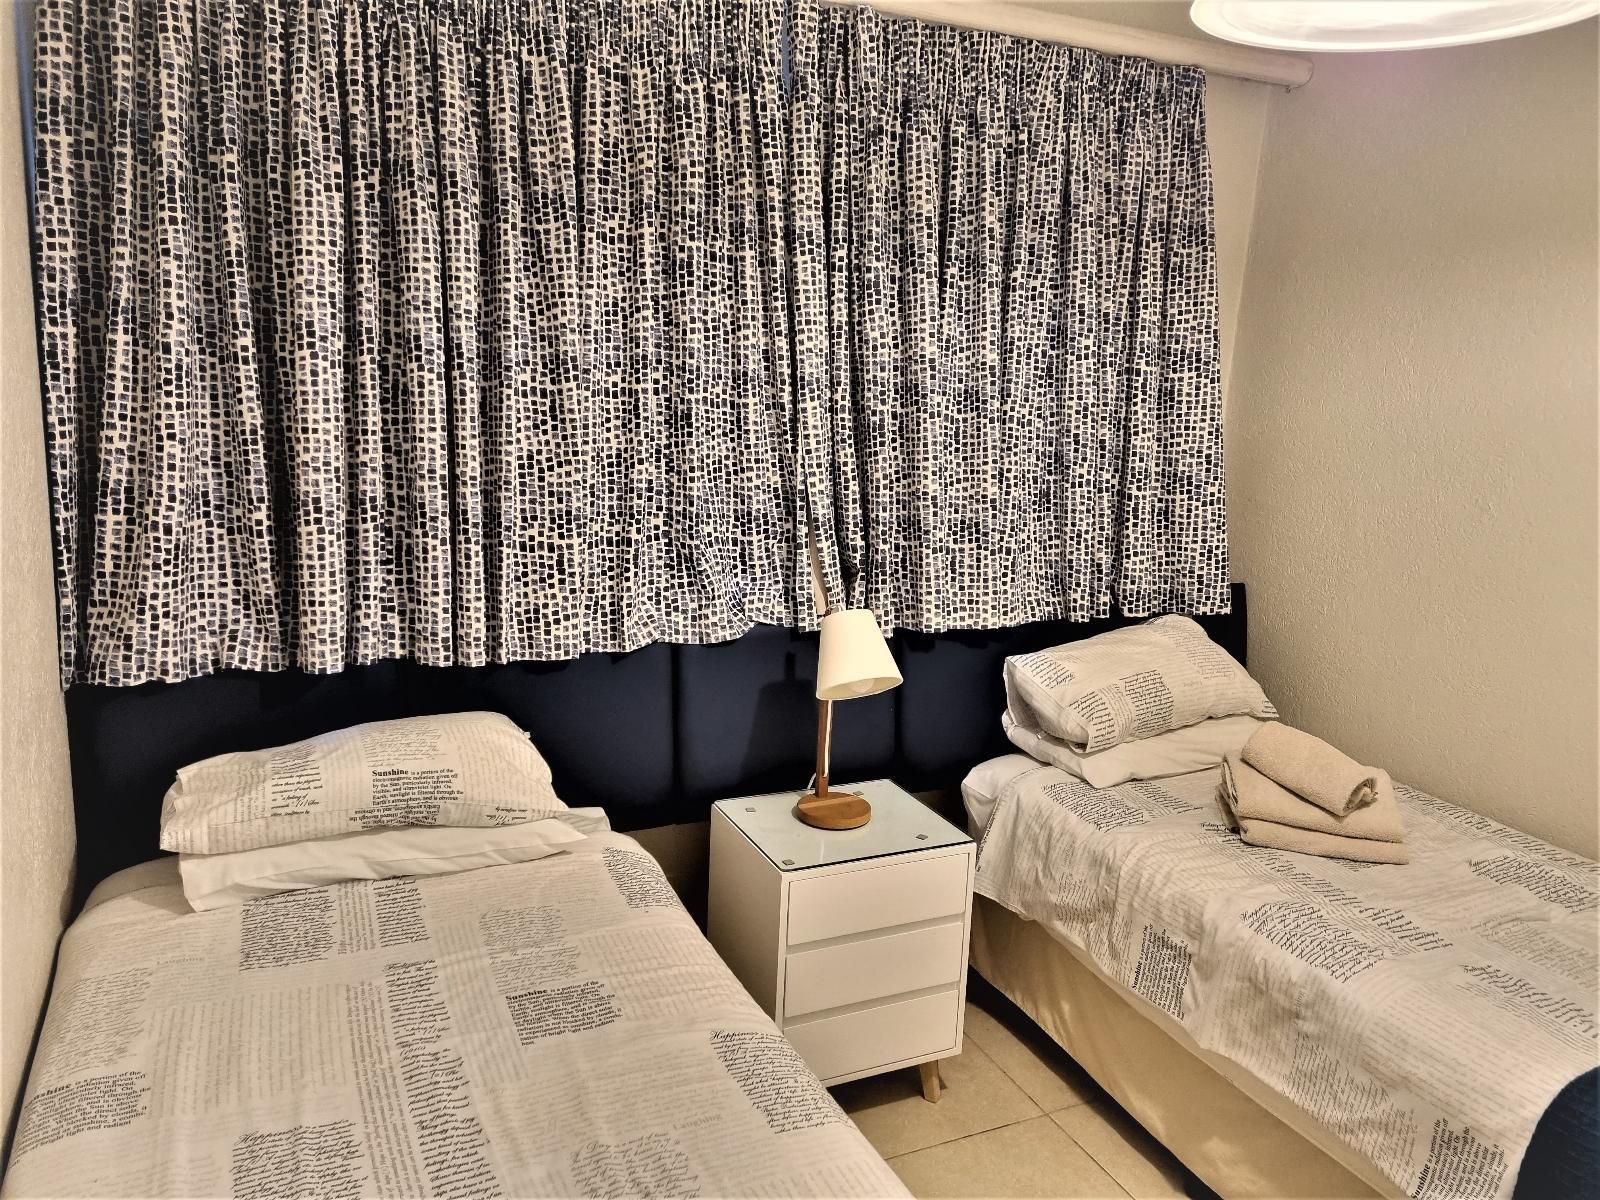 405 Bermudas Umhlanga Durban Kwazulu Natal South Africa Bedroom